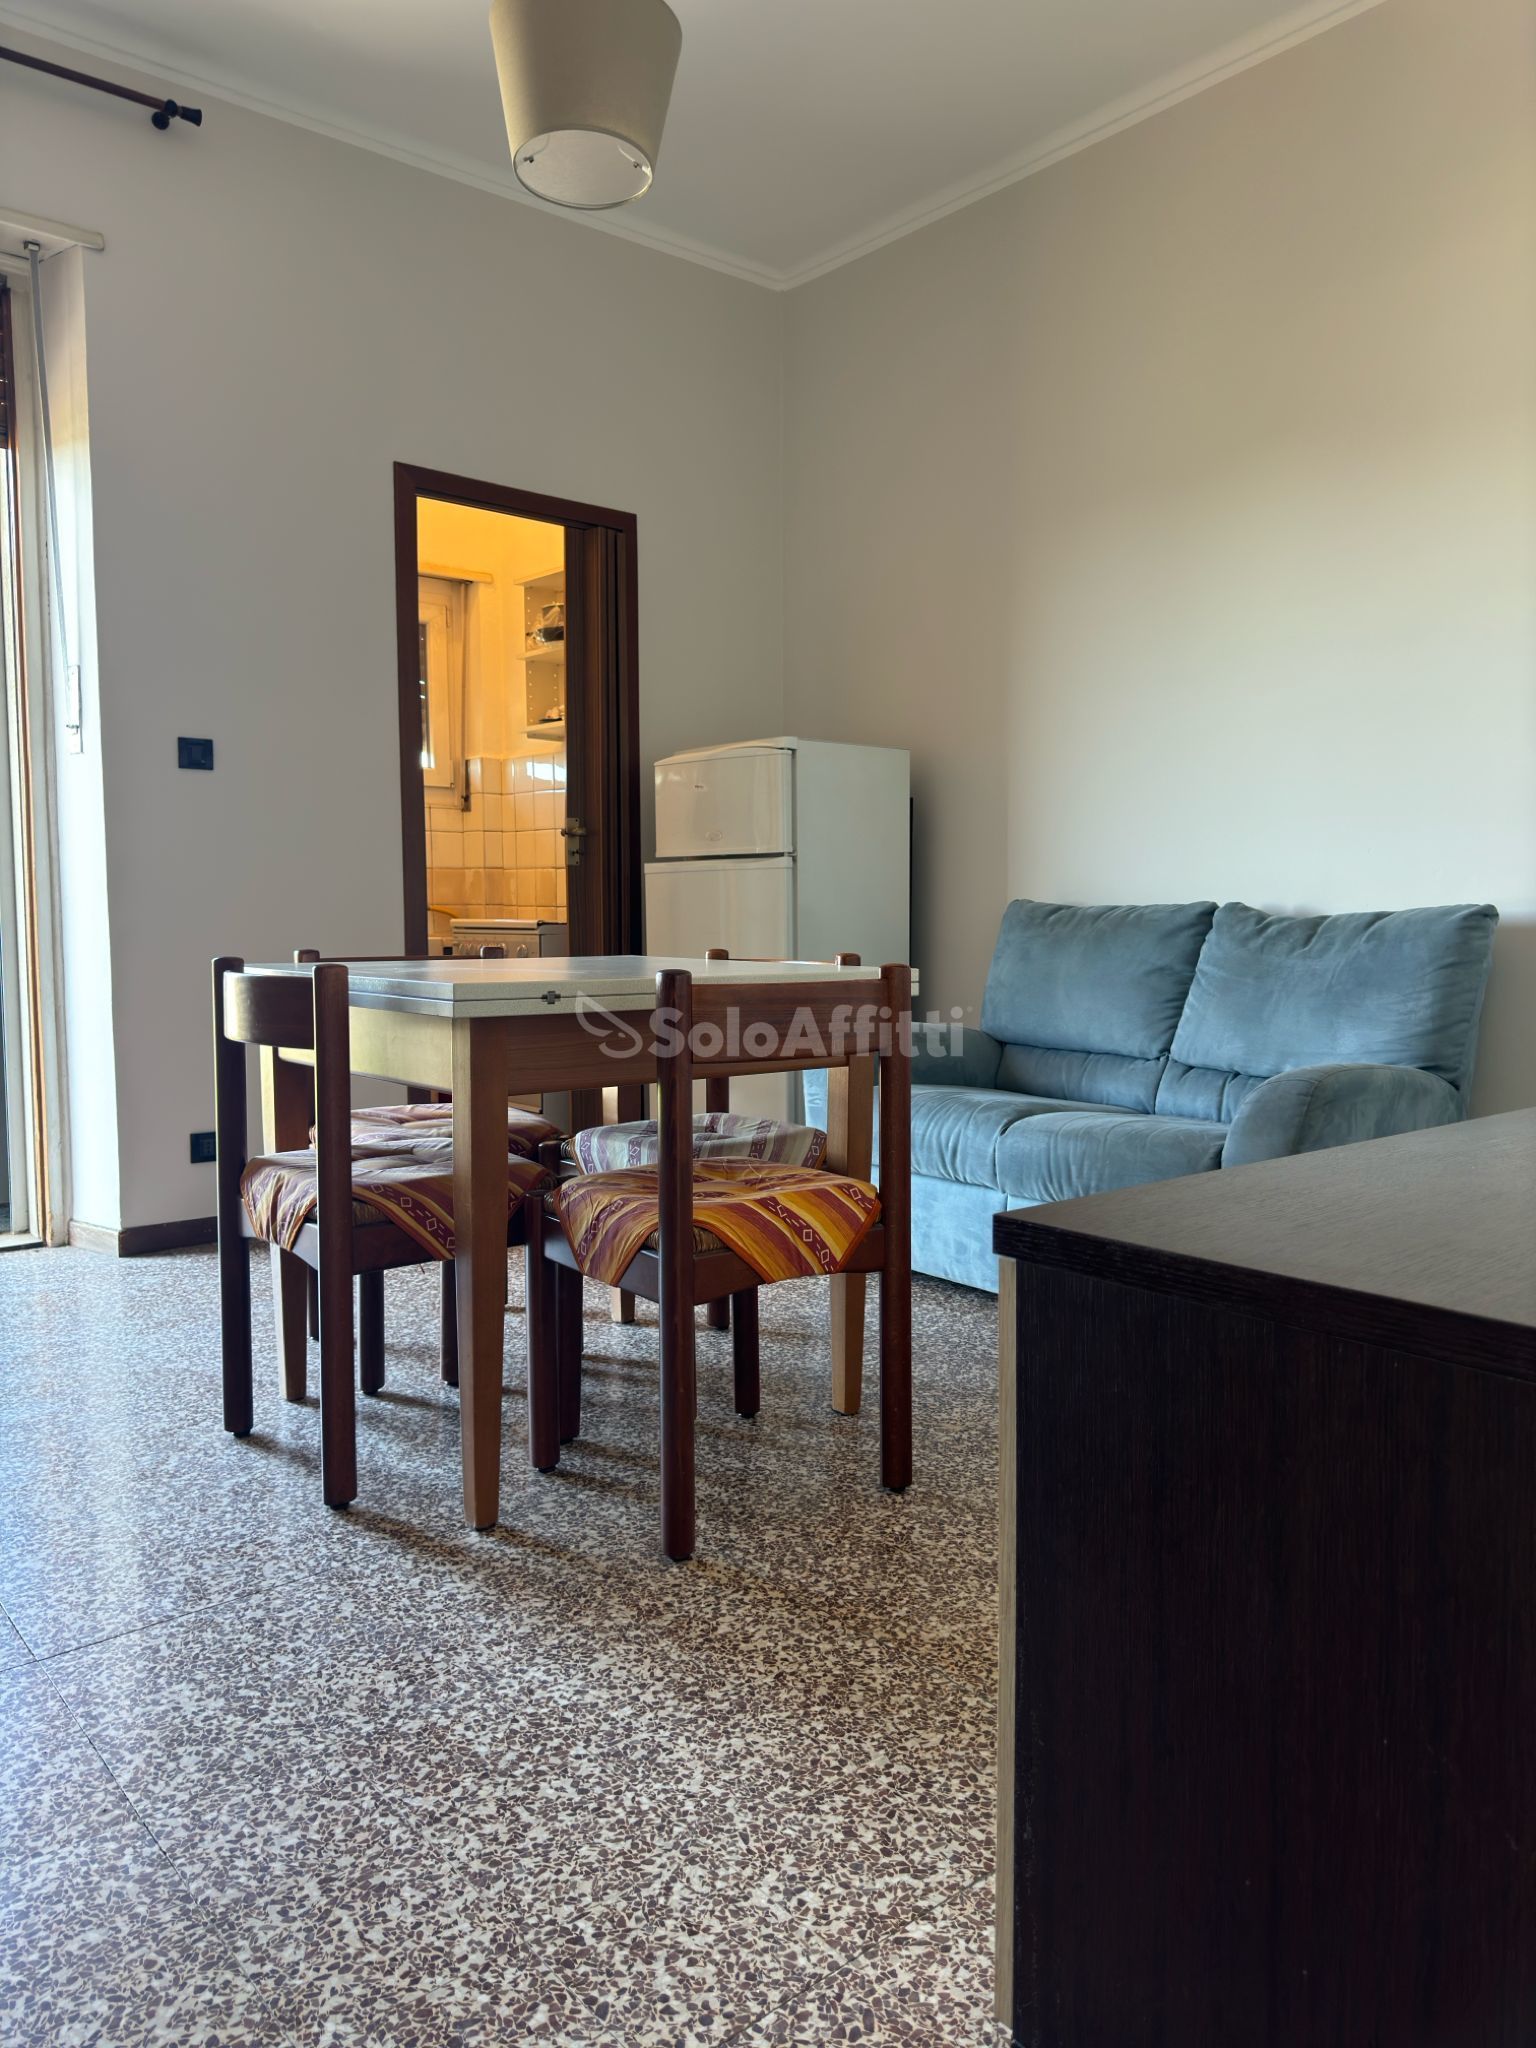 Appartamento in affitto in via francesco de sanctis 100, Torino